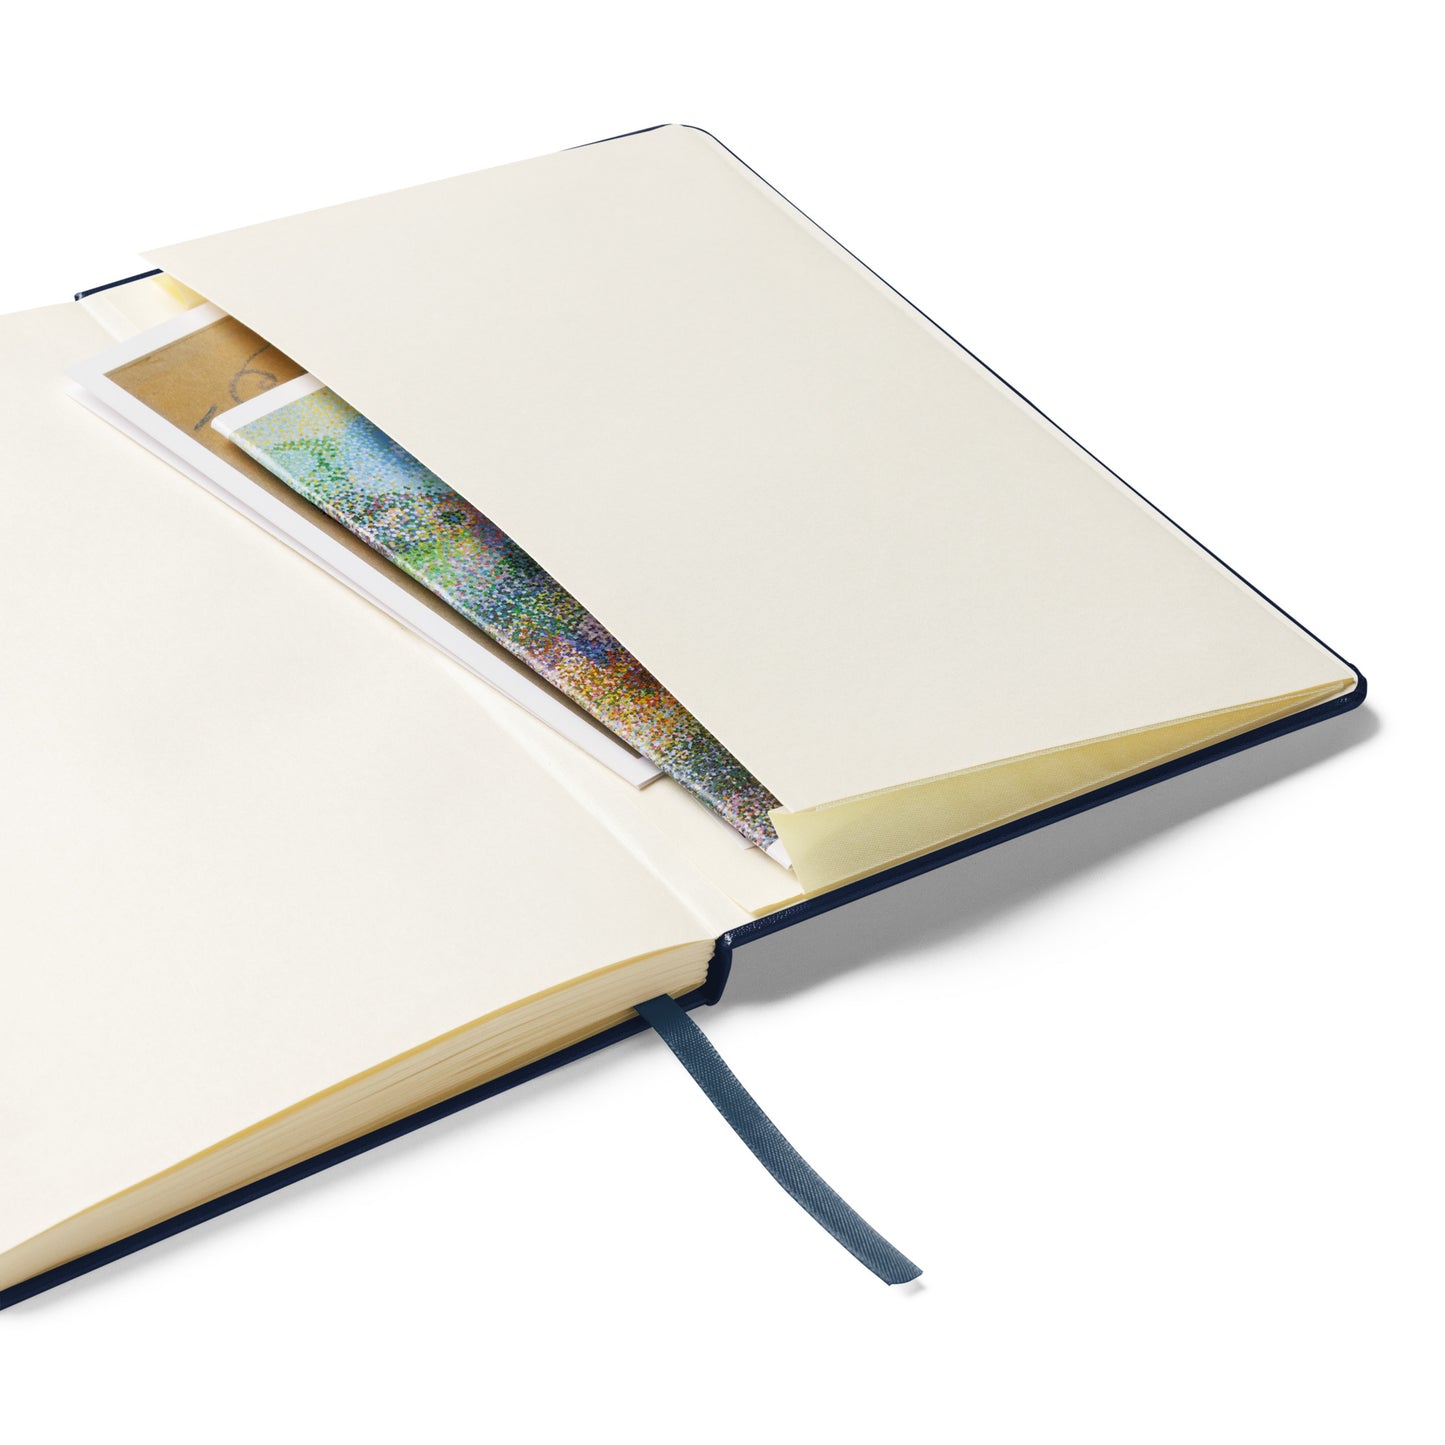 Pretty Damn Ambitious™ Hardcover Bound Notebook